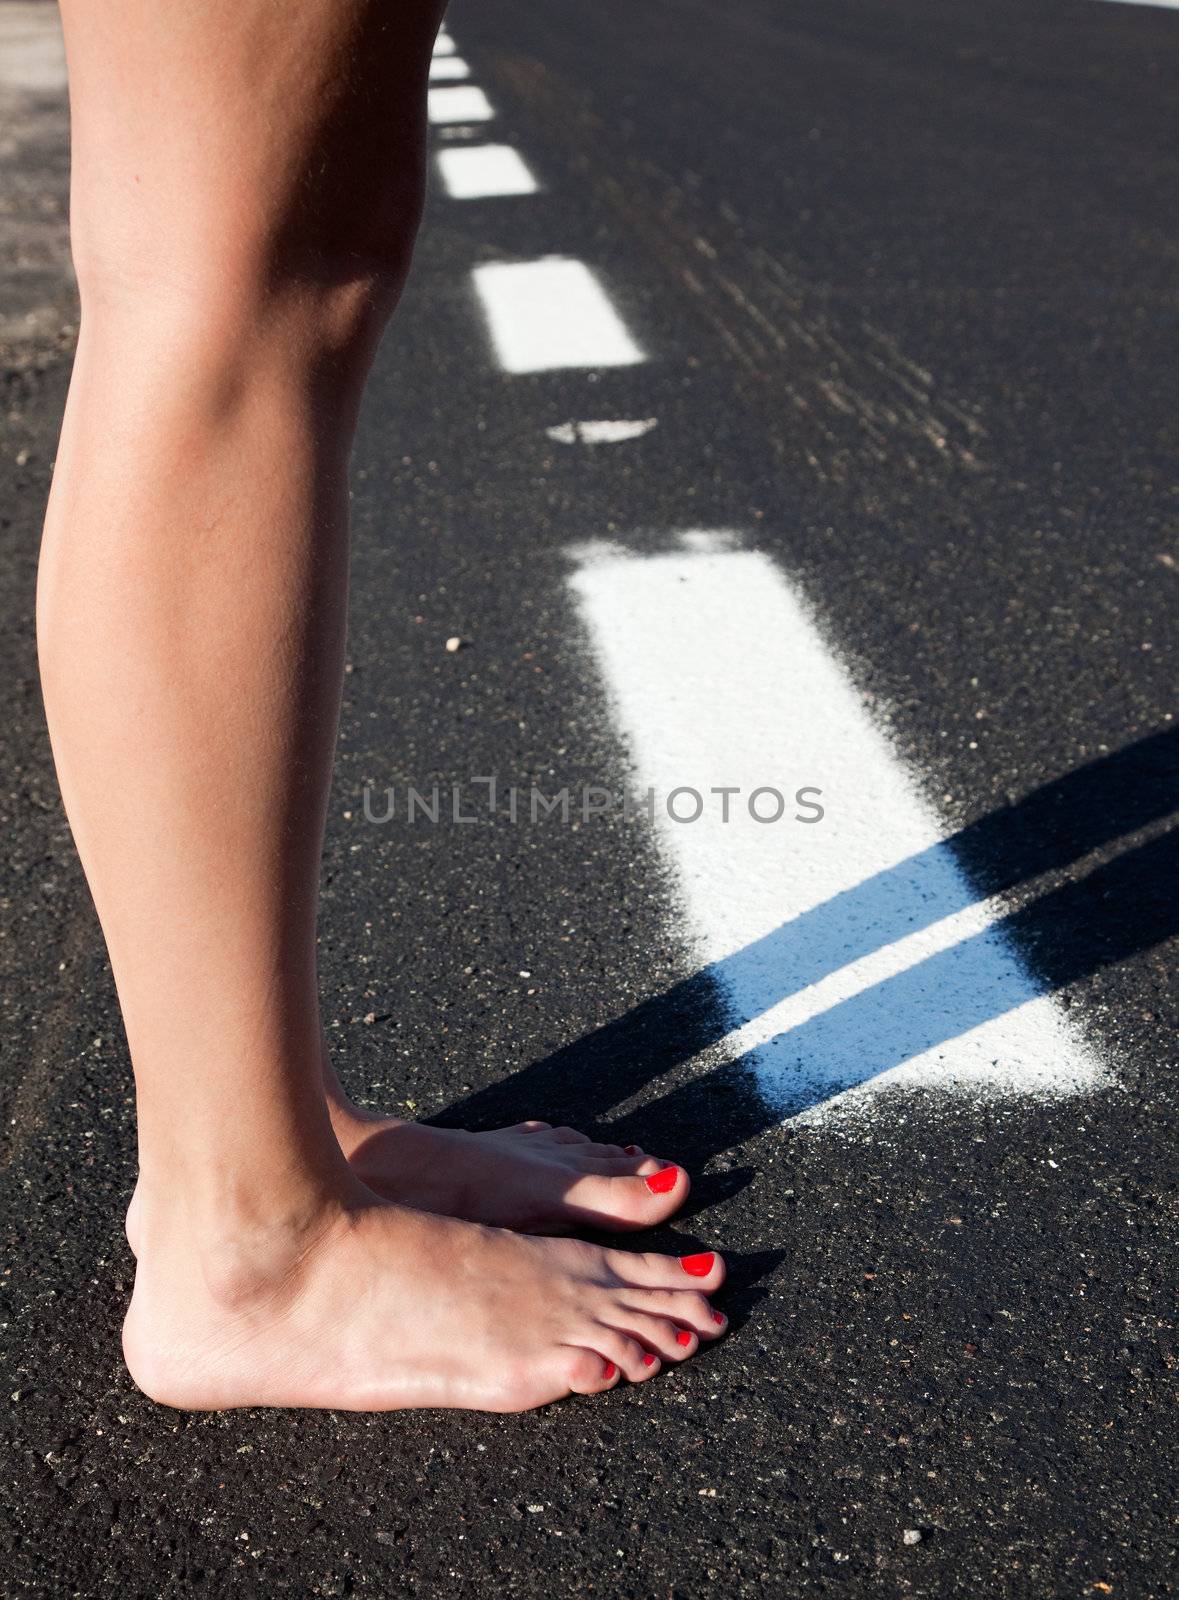 Barefoot woman in a road by carloscastilla